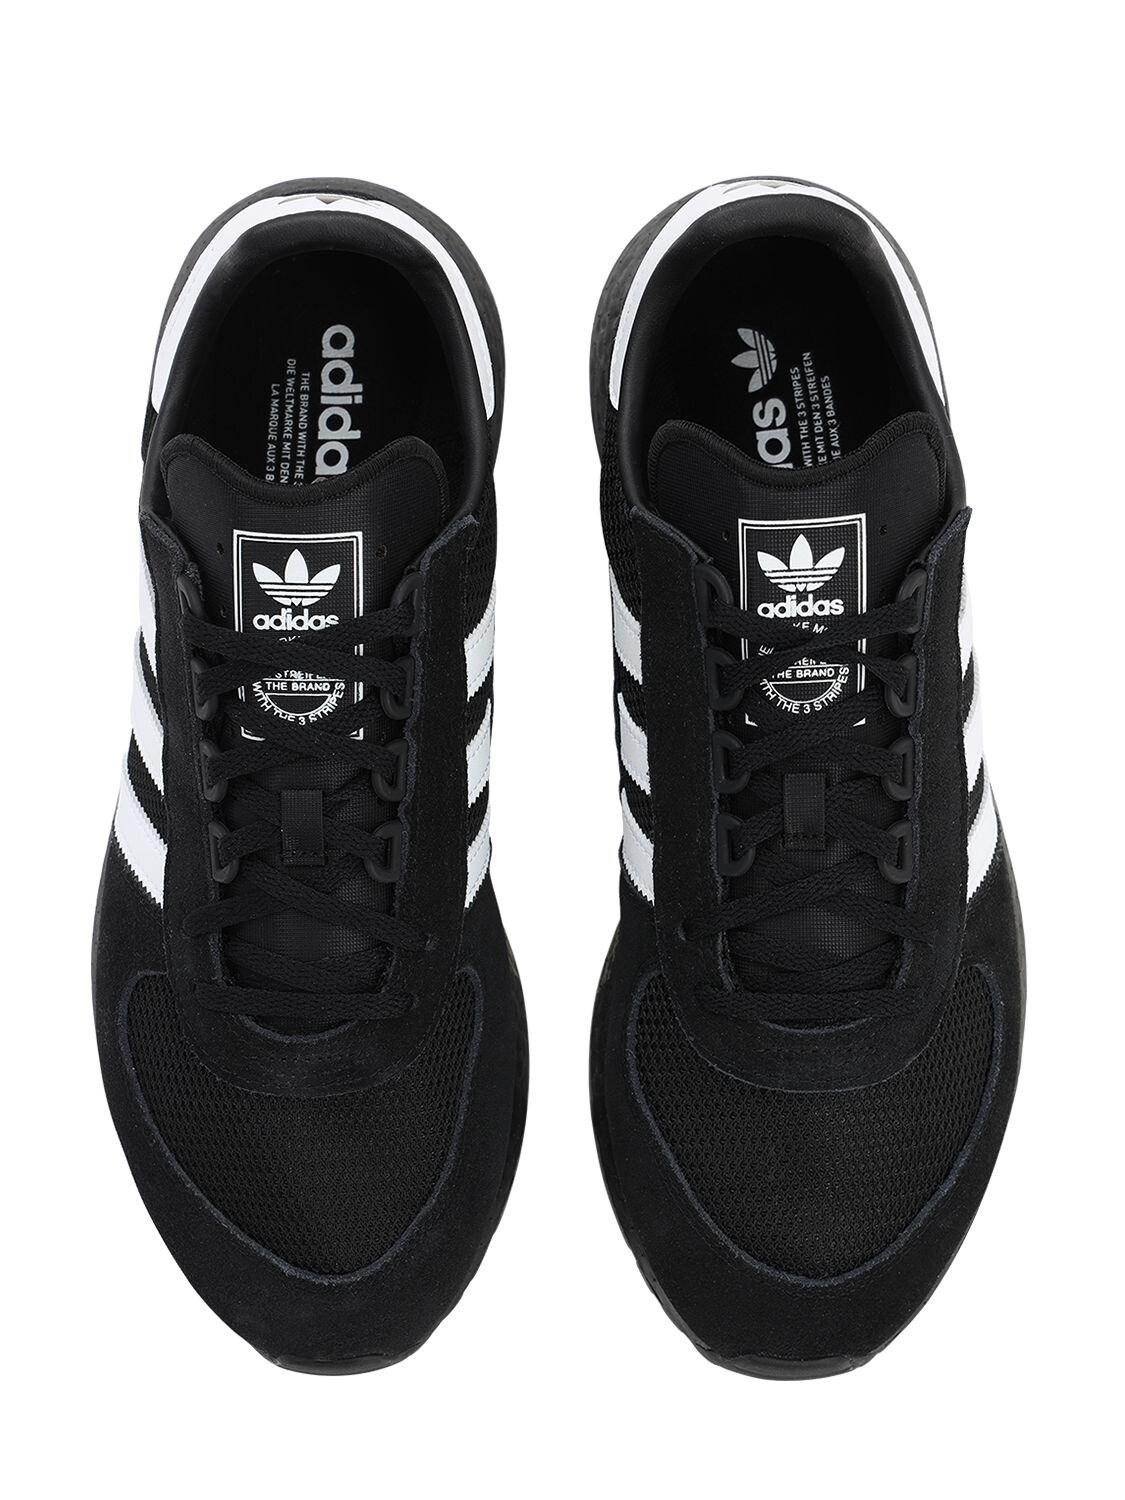 adidas Originals Tech Sneakers in Black | Lyst